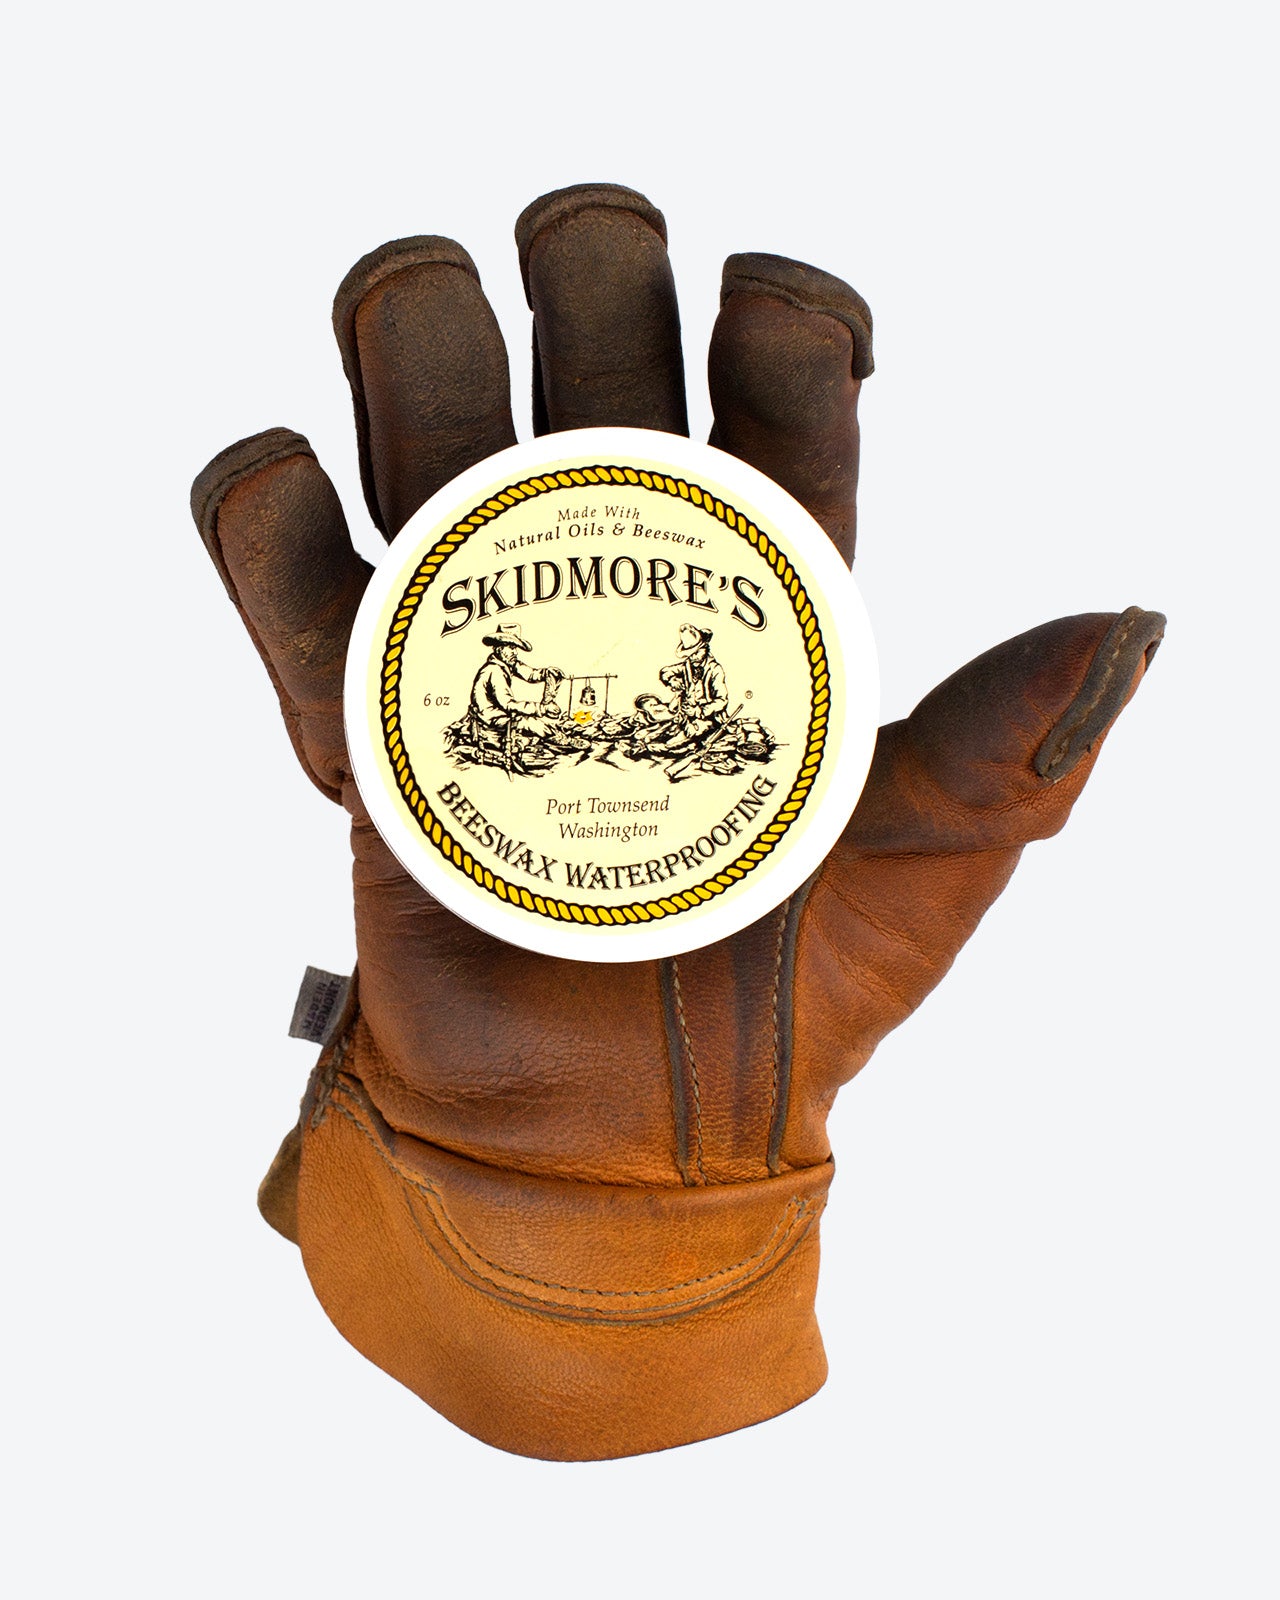 Leather Waterproofing, Skidmore's Beeswax